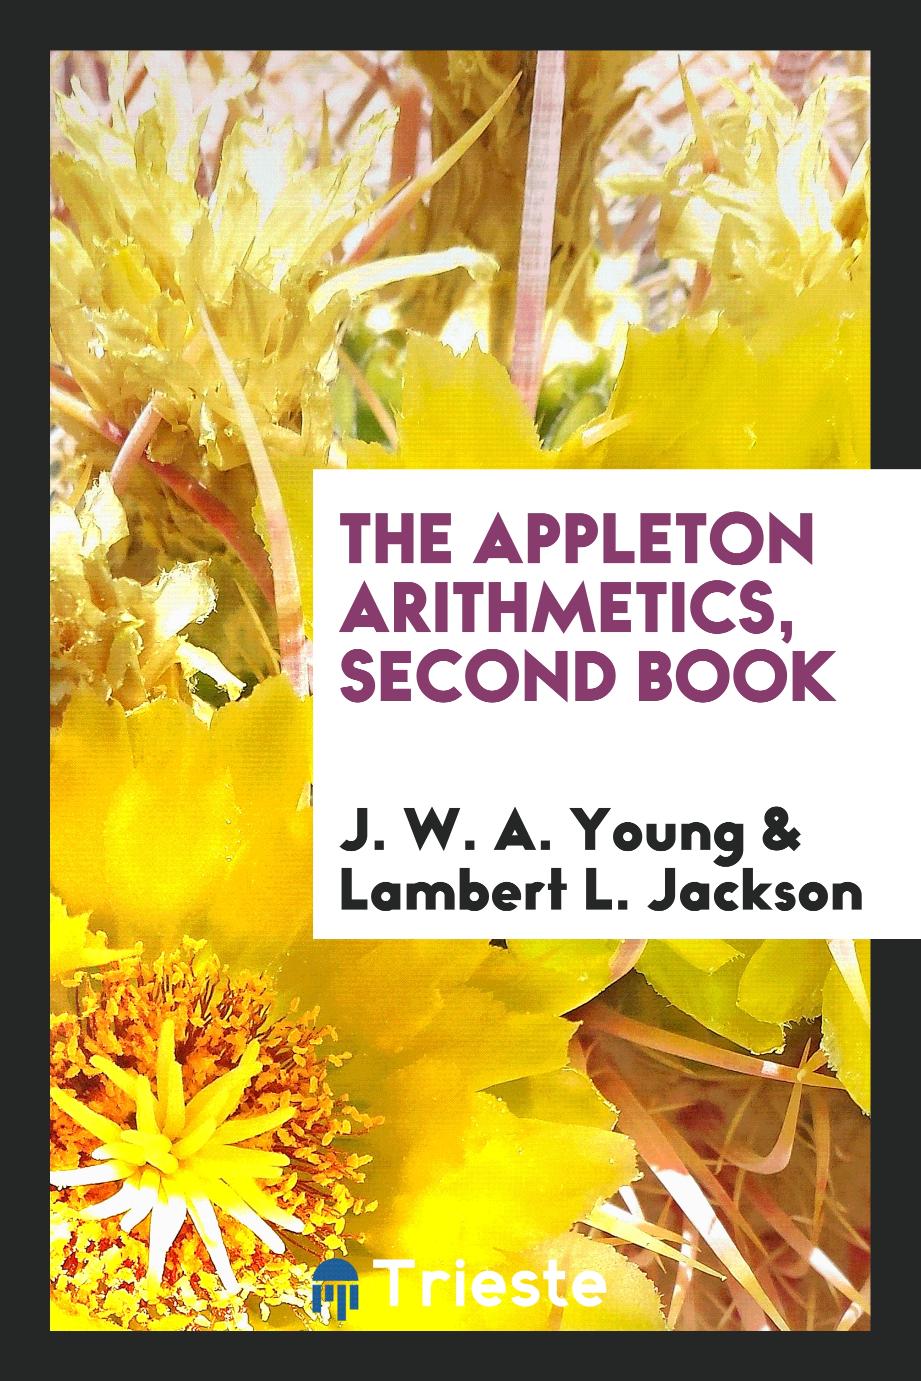 The Appleton Arithmetics, Second Book